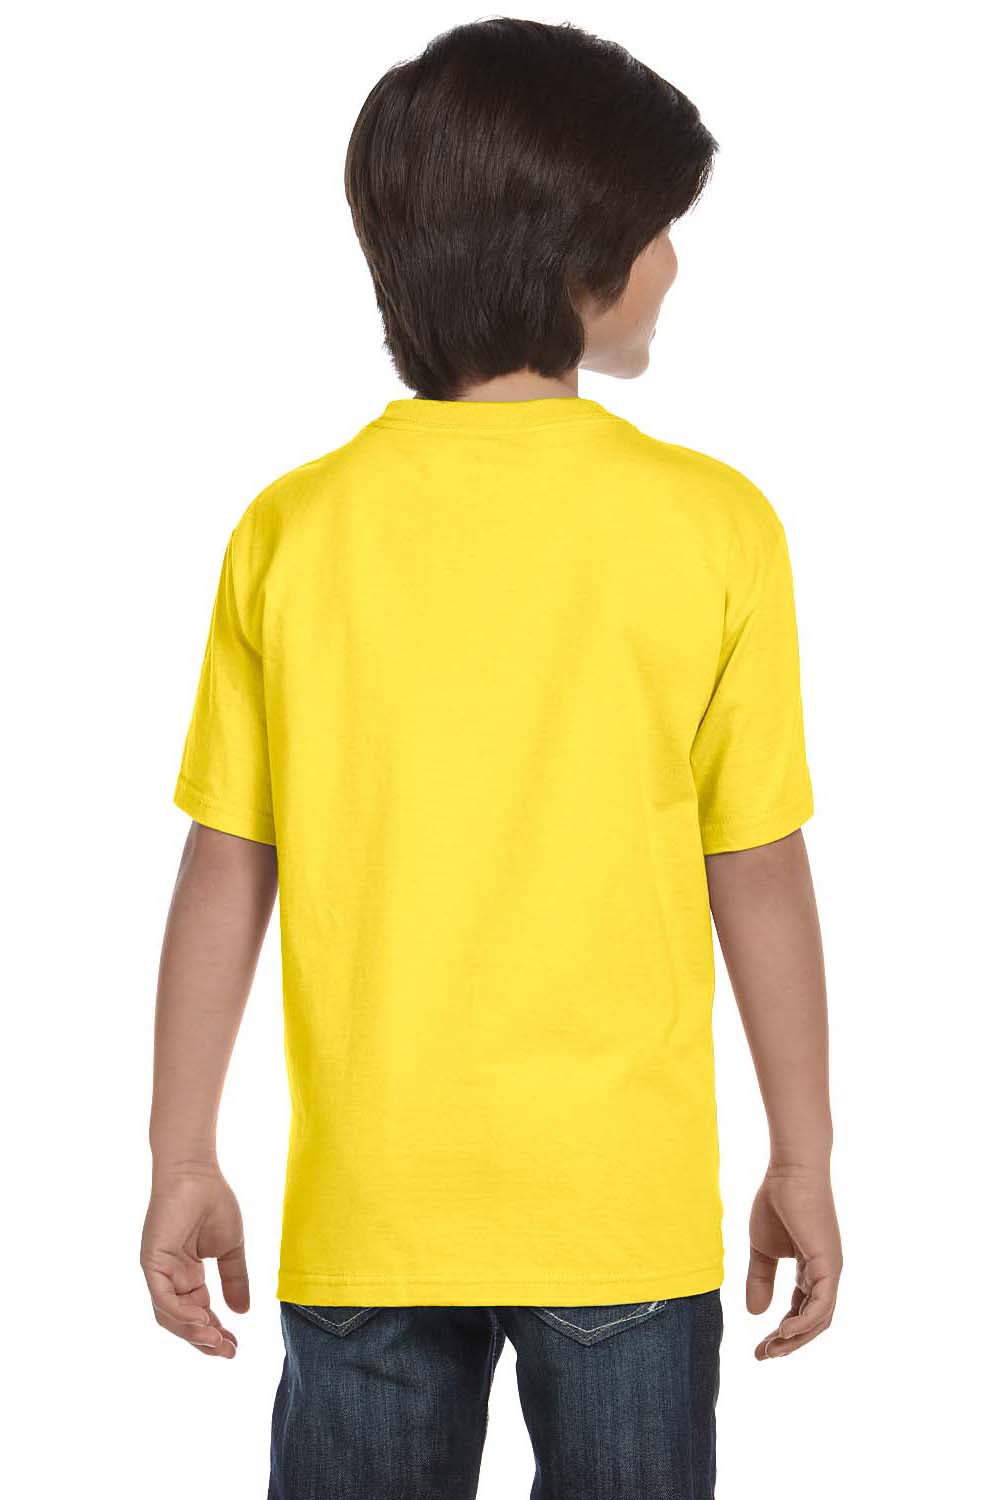 Hanes 5380 Youth Beefy-T Short Sleeve Crewneck T-Shirt Yellow Back